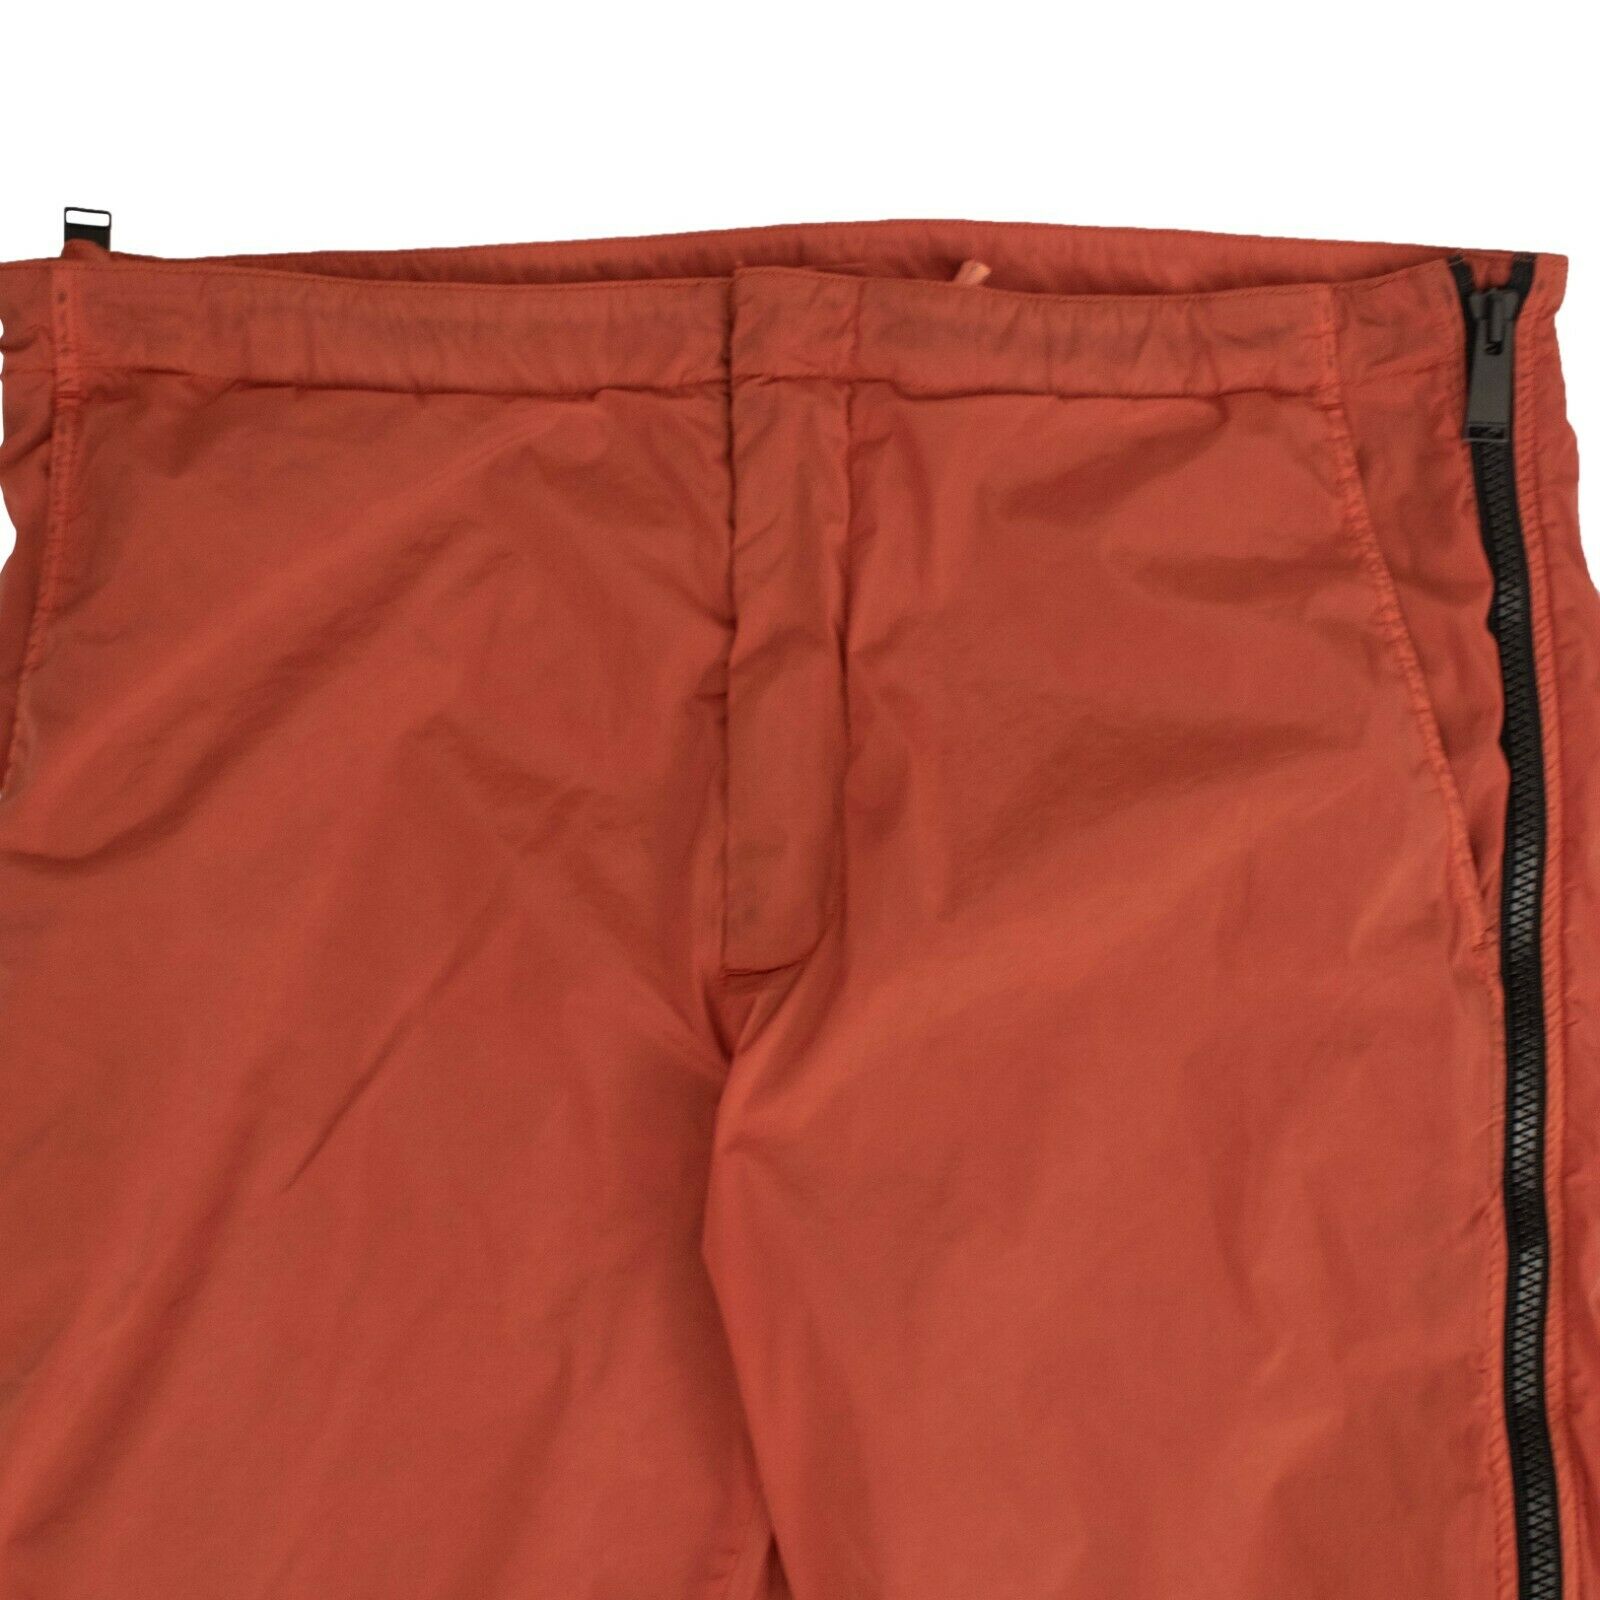 Heron Preston Side Zipper Pants - Orange